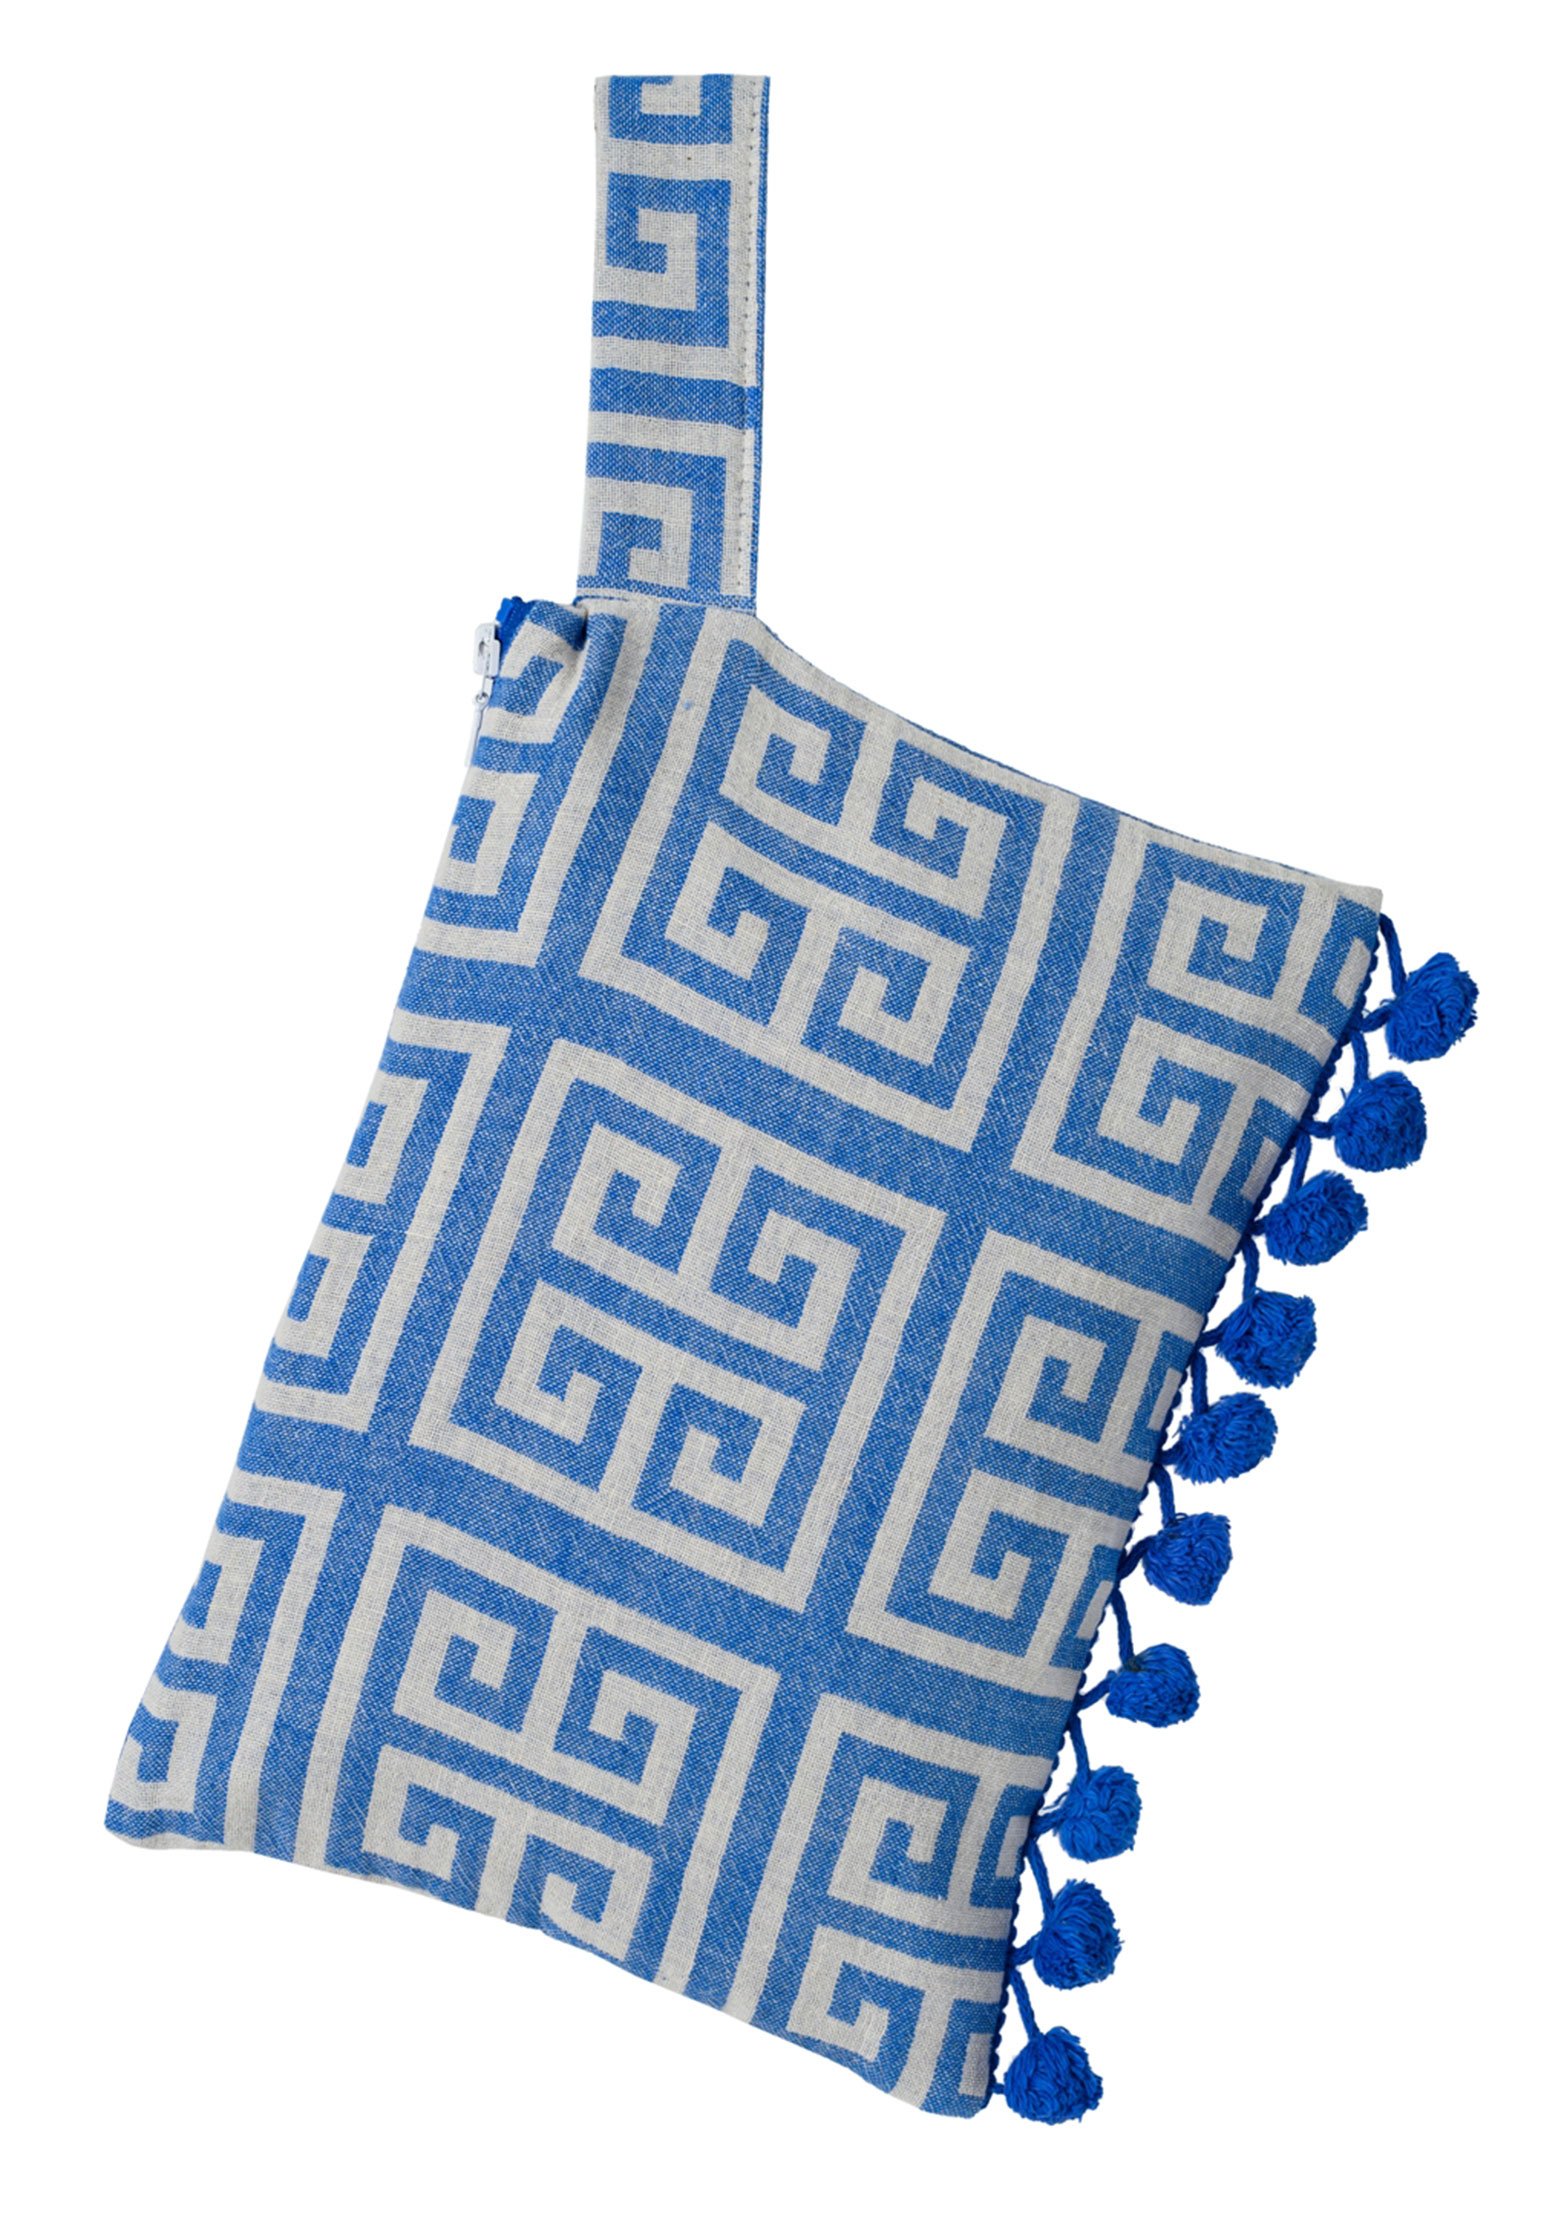 Clutch AELIA ANNA Color: blue (Code: 4004) in online store Allure